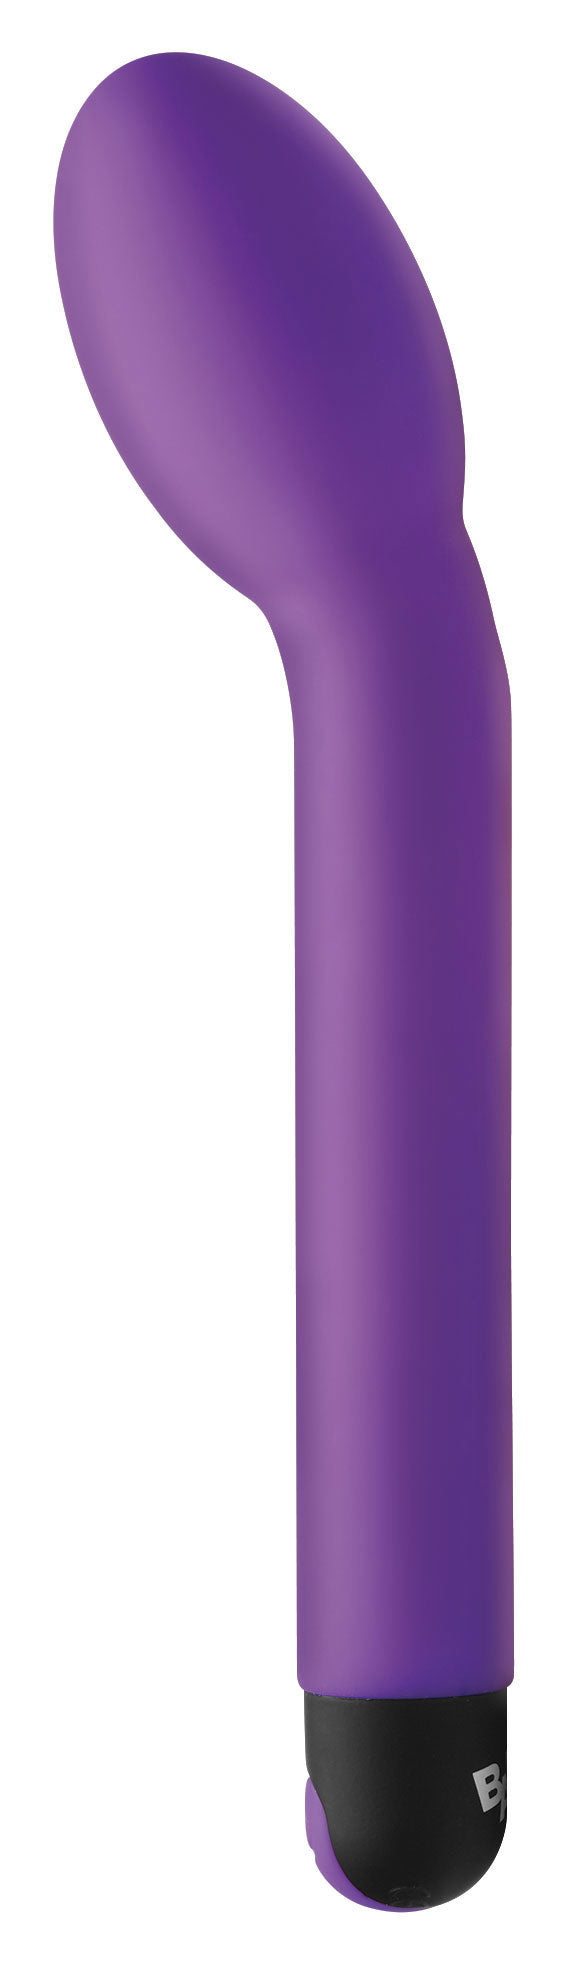 10x G-Spot Vibrator - Purple-Vibrators-XR Brands Bang-Andy's Adult World